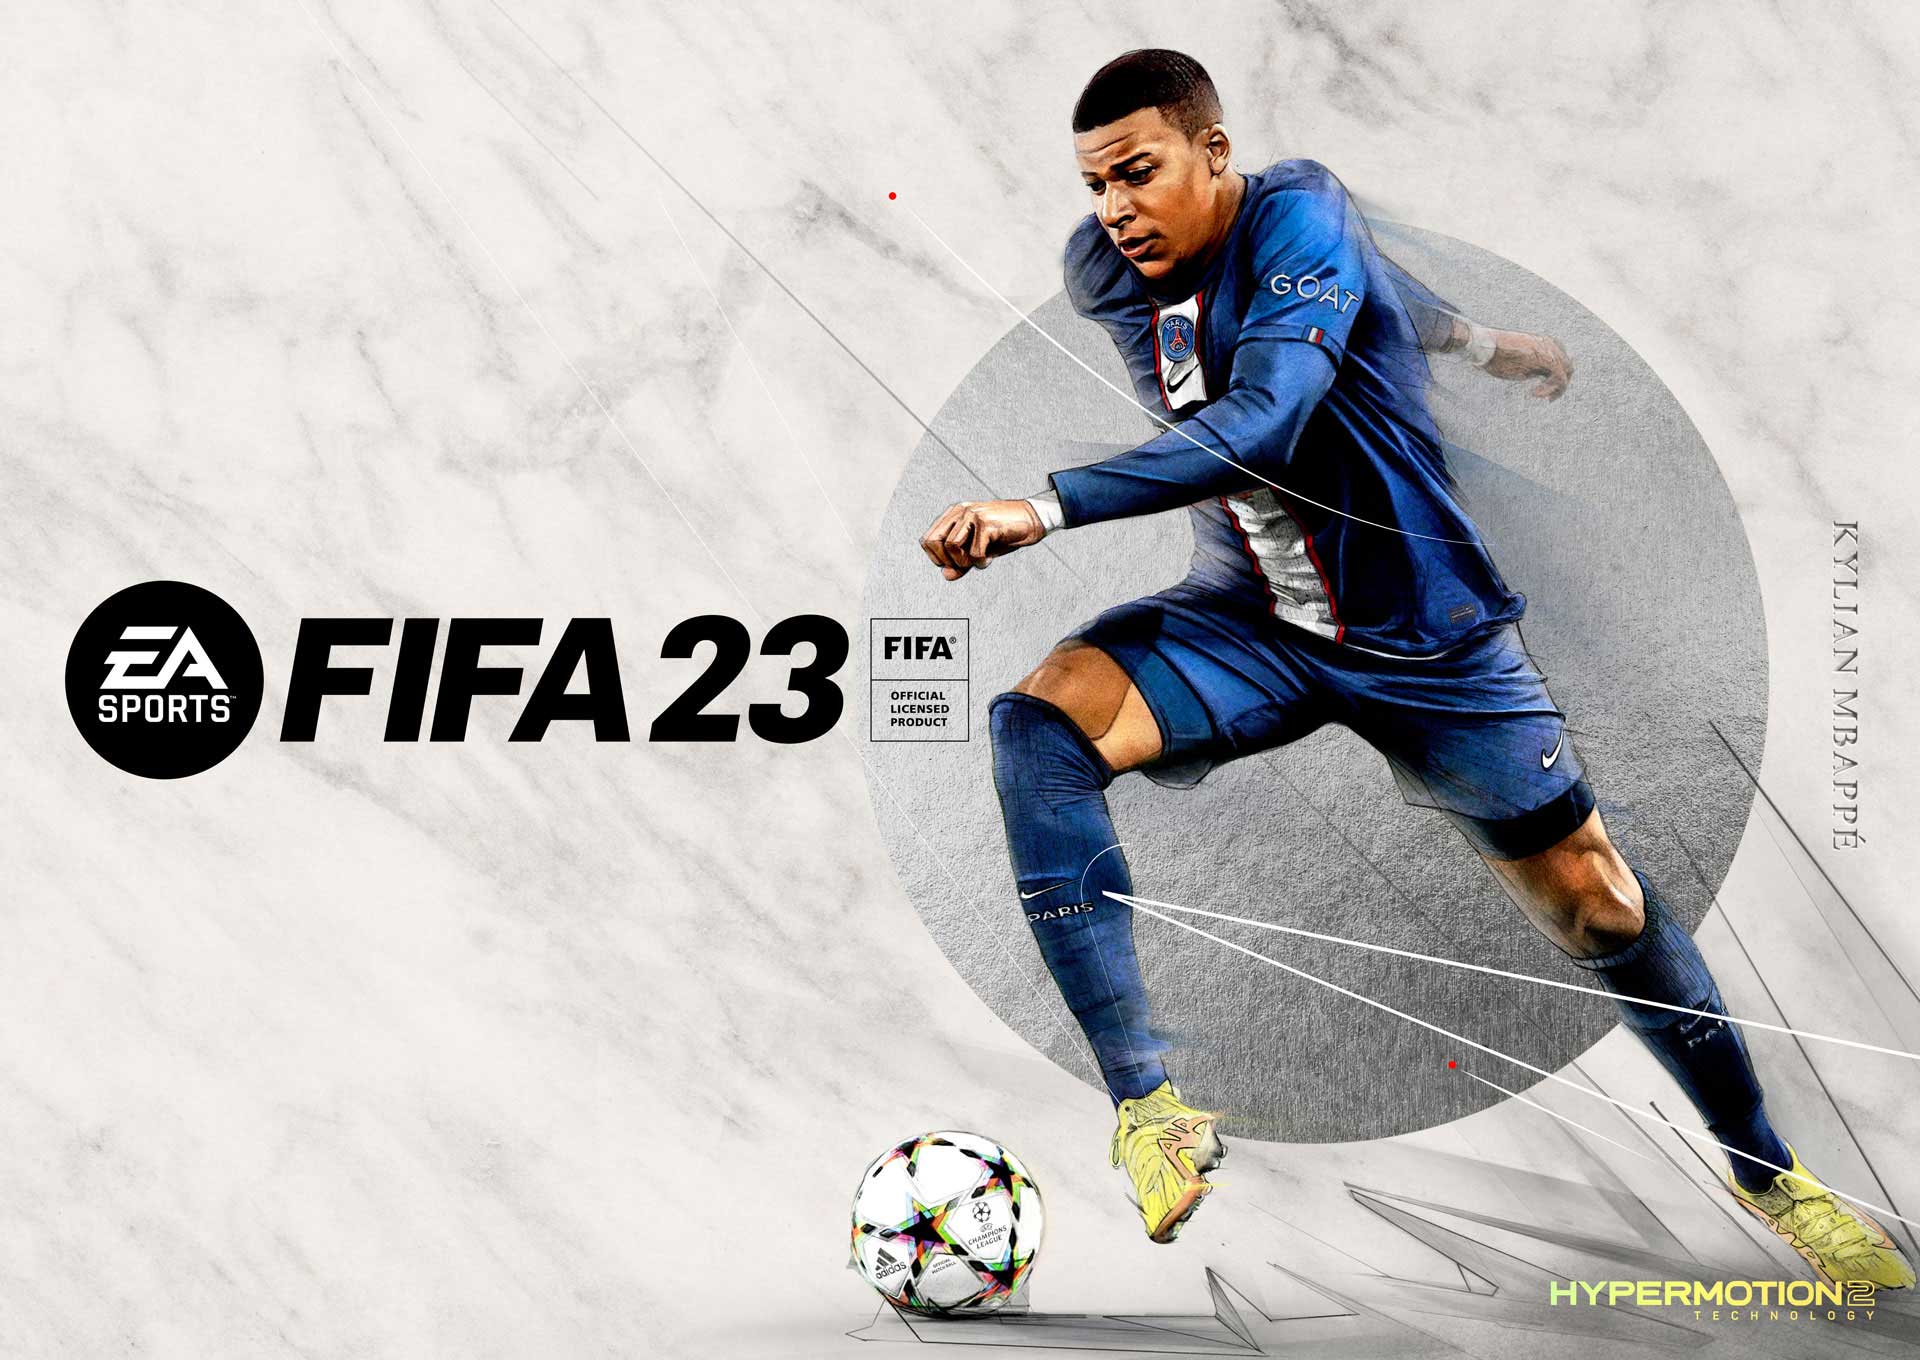 FIFA 23, Issa Vibe Games, issavibegames.com